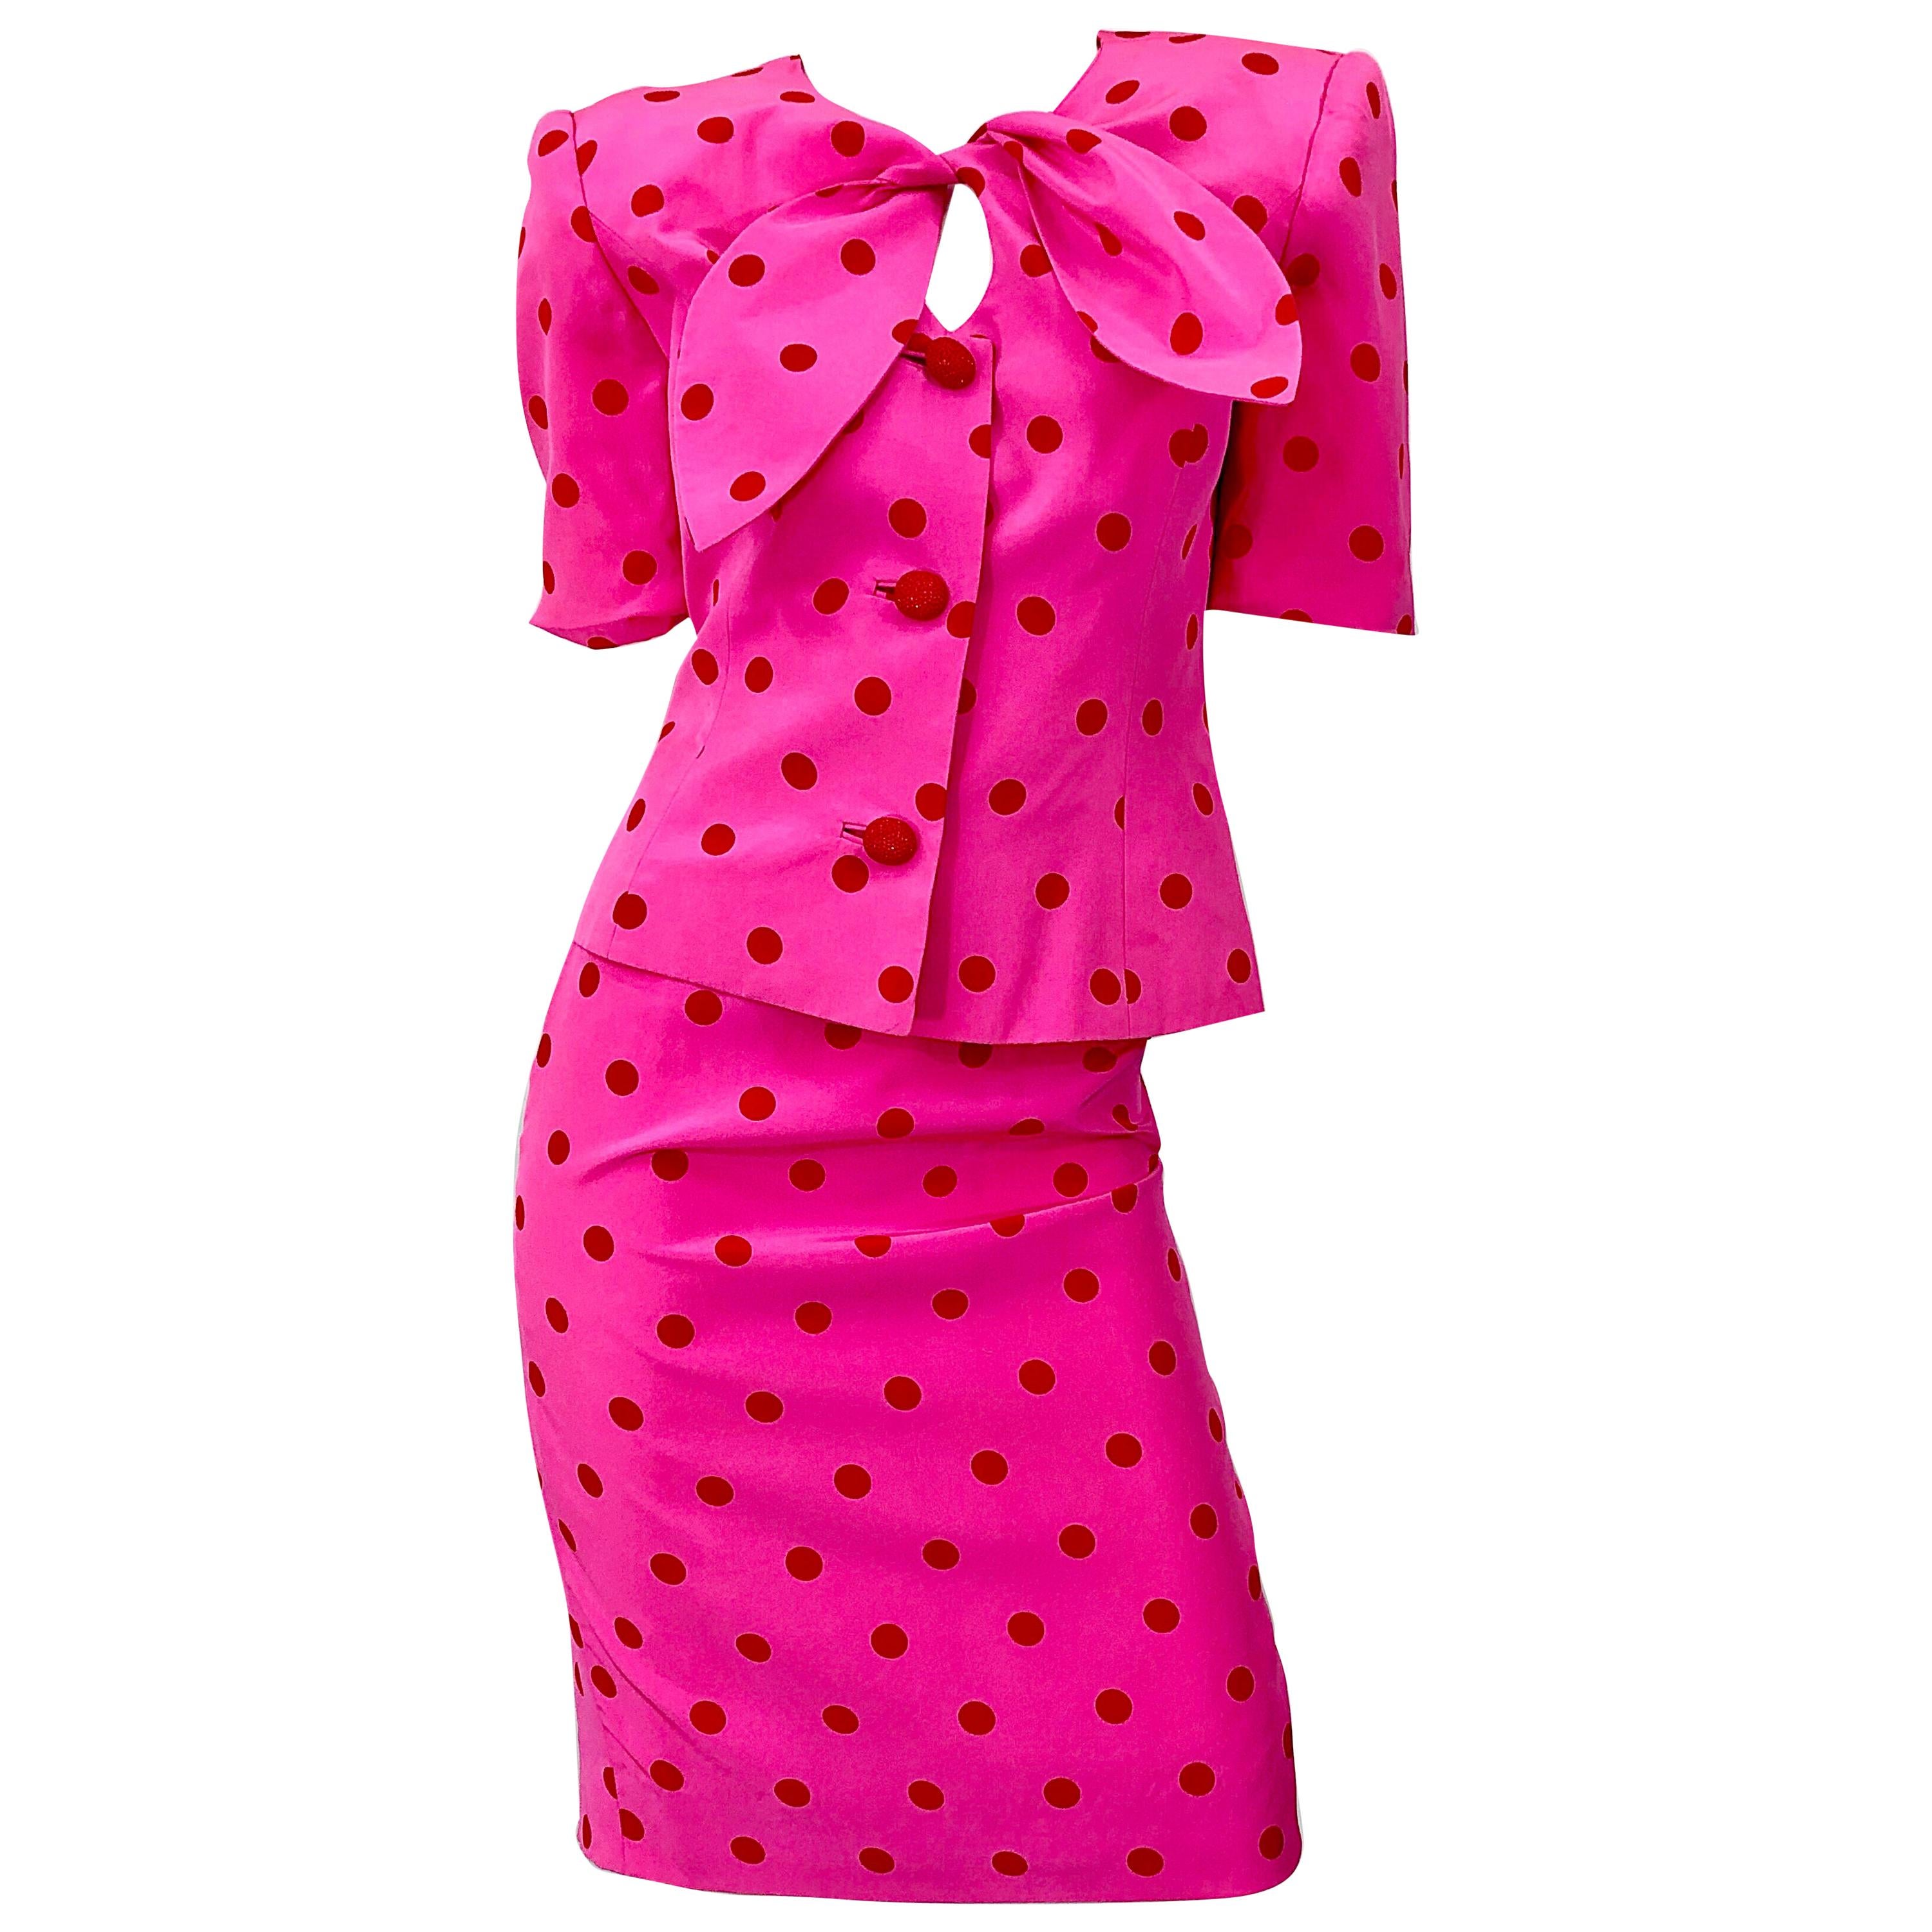 1990s David Hayes for Saks 5th Avenue Hot Pink Red Polka Dot Vintage Skirt Suit